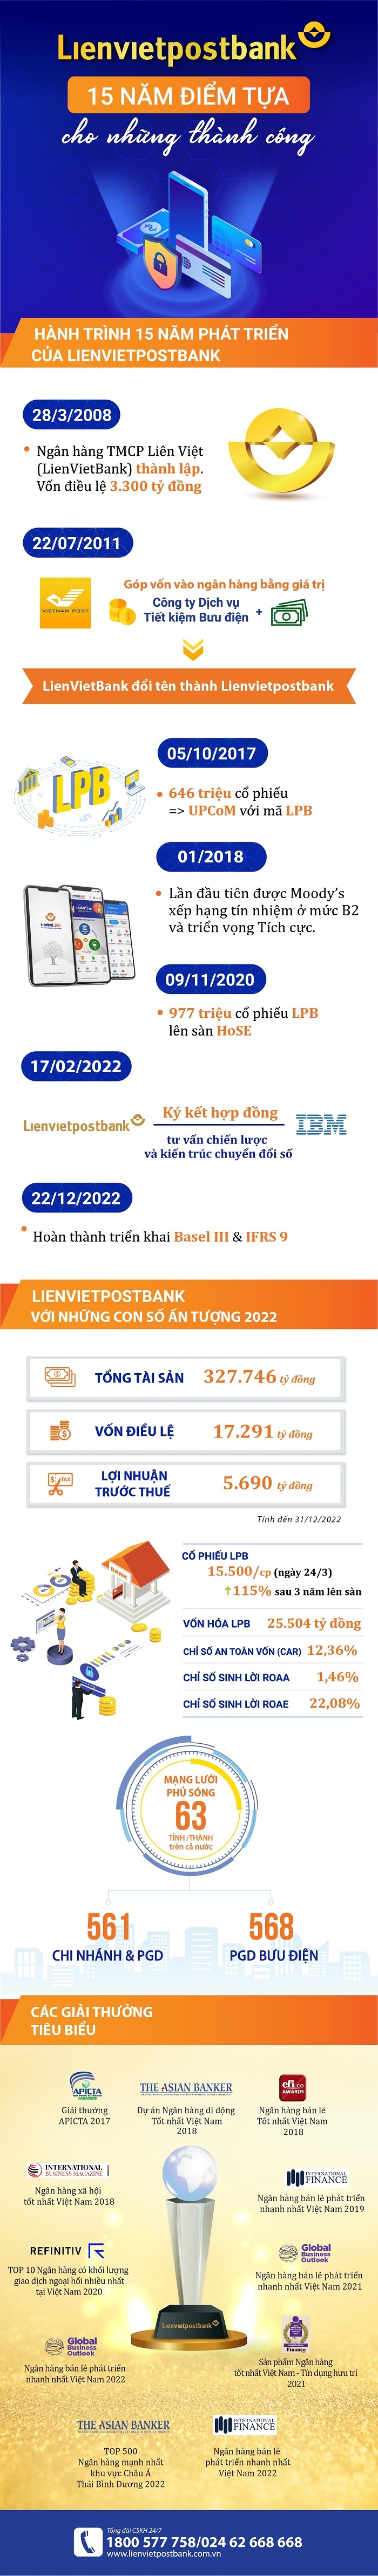 infographic lienvietpostbank 15 nam mo rong quy mo loi nhuan tang truong dot pha